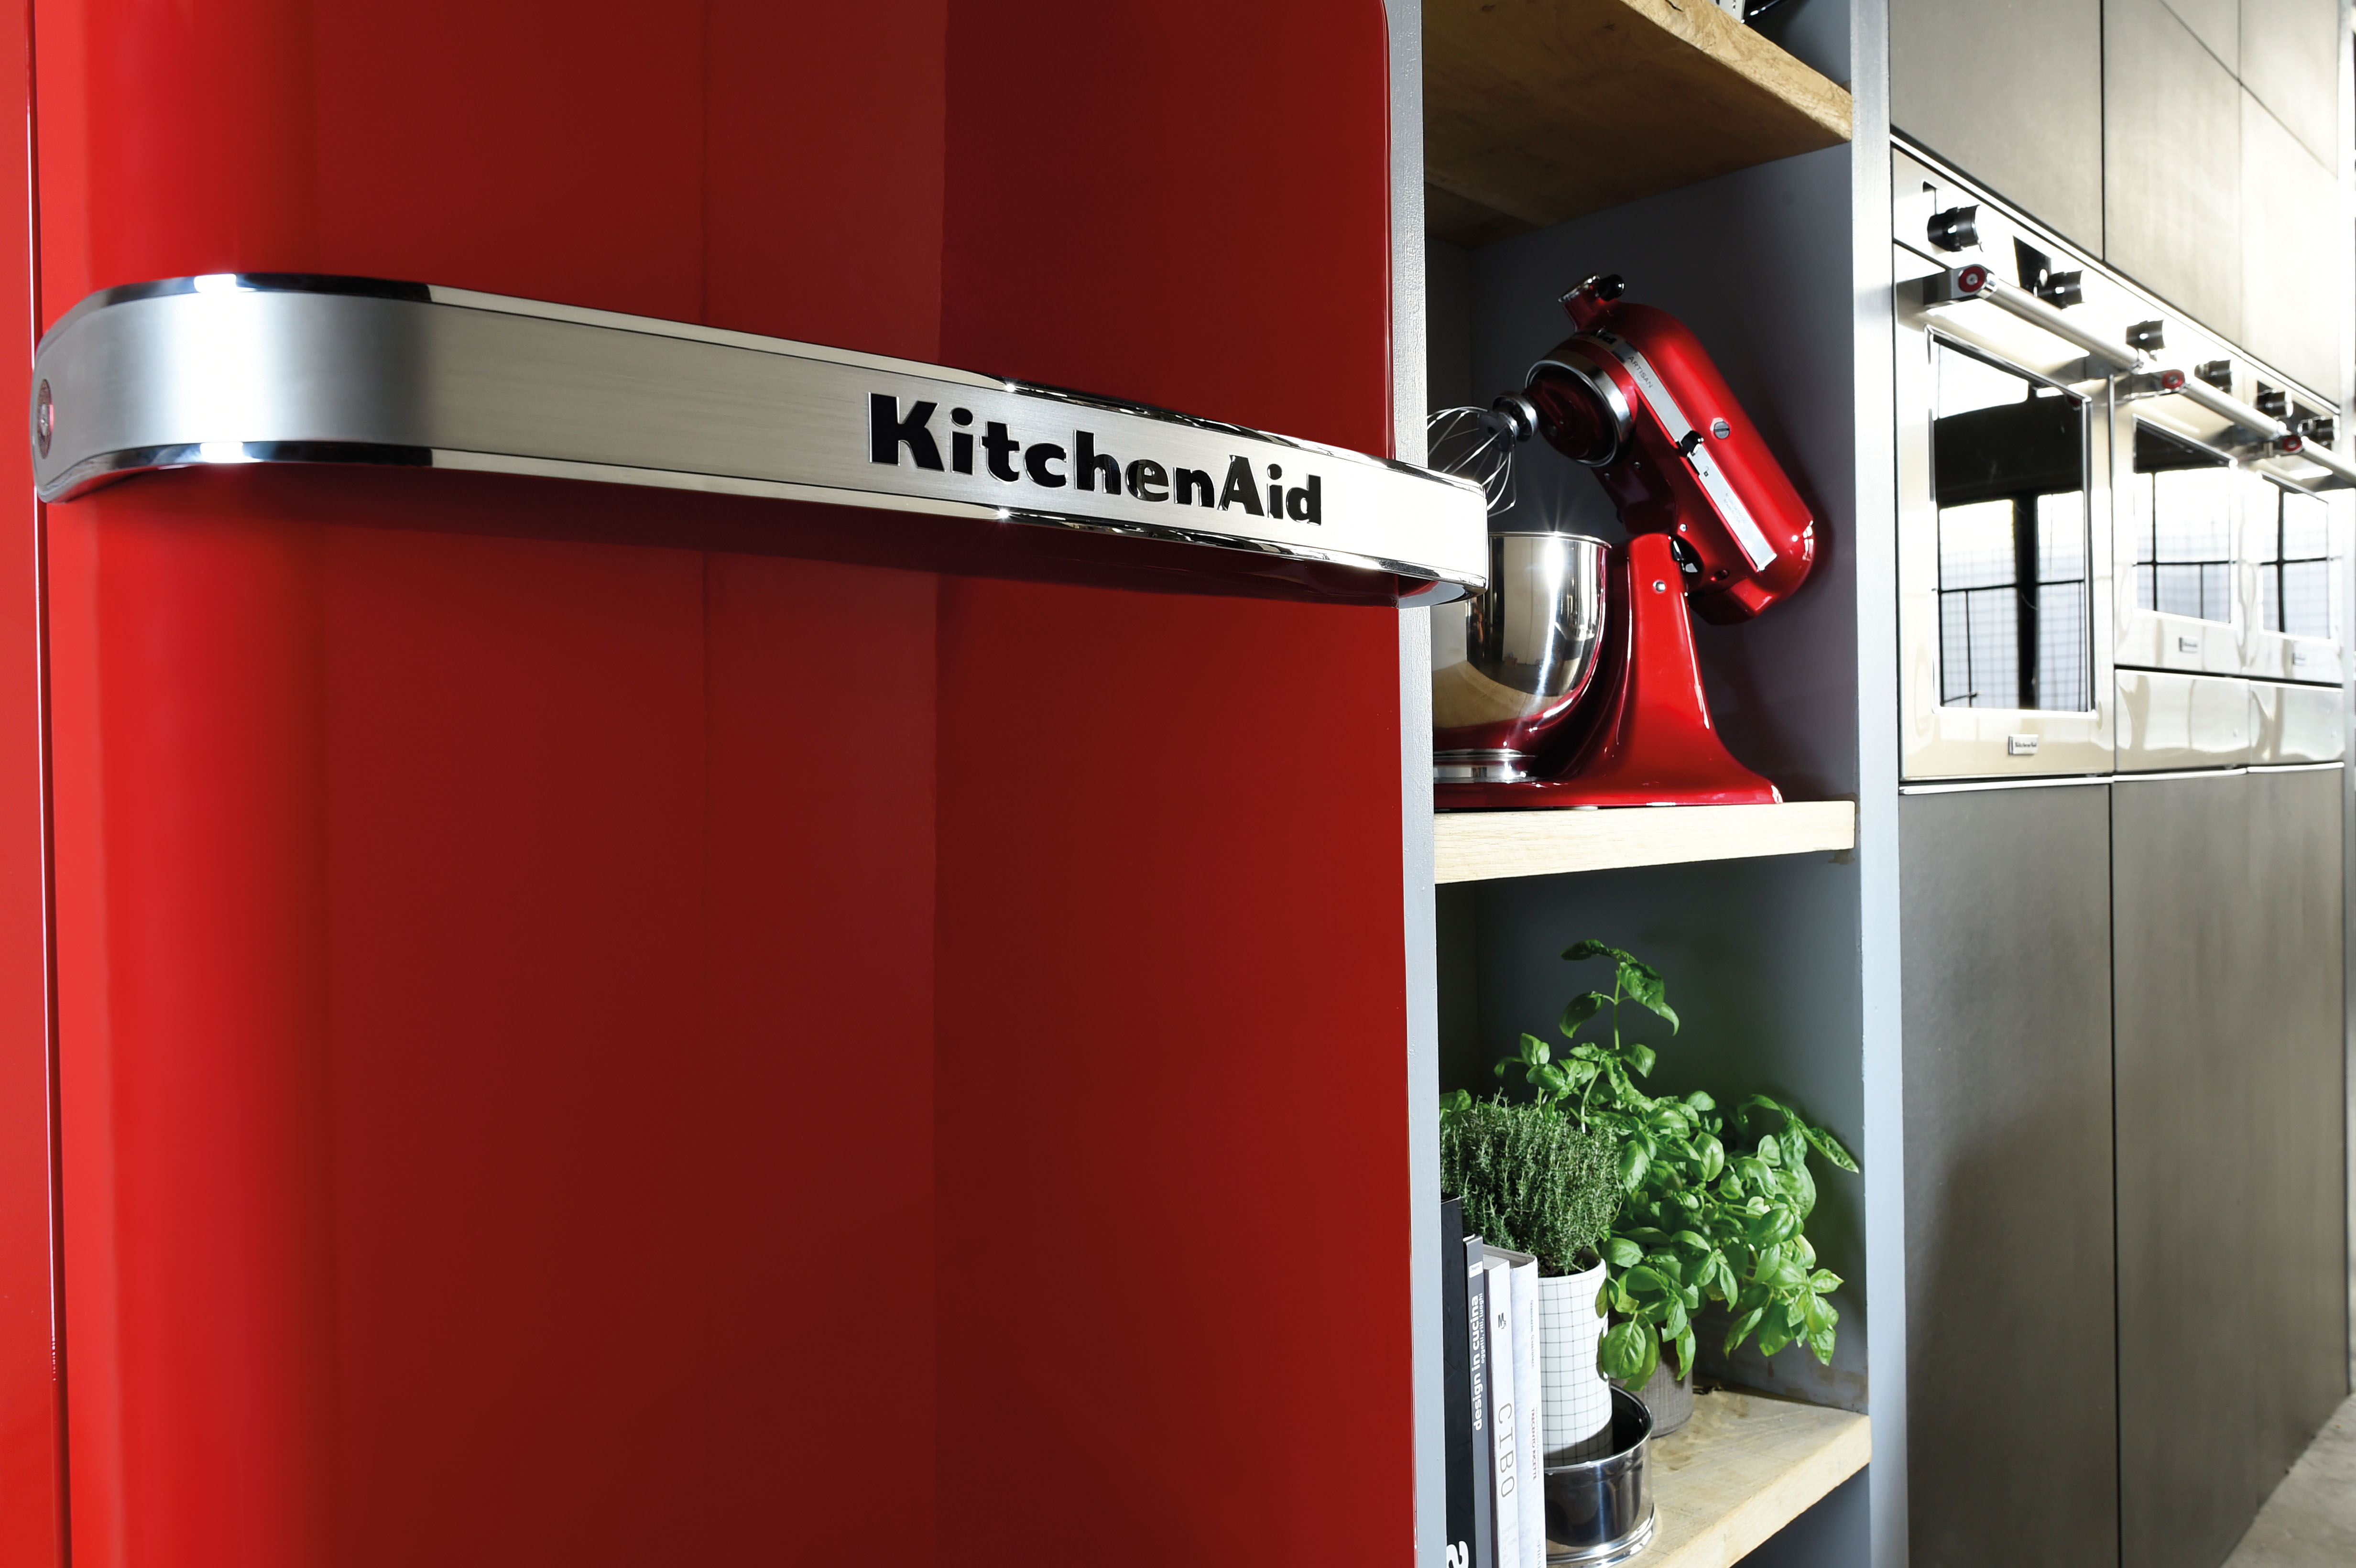 KitchenAid launches retro fridge – Housewares